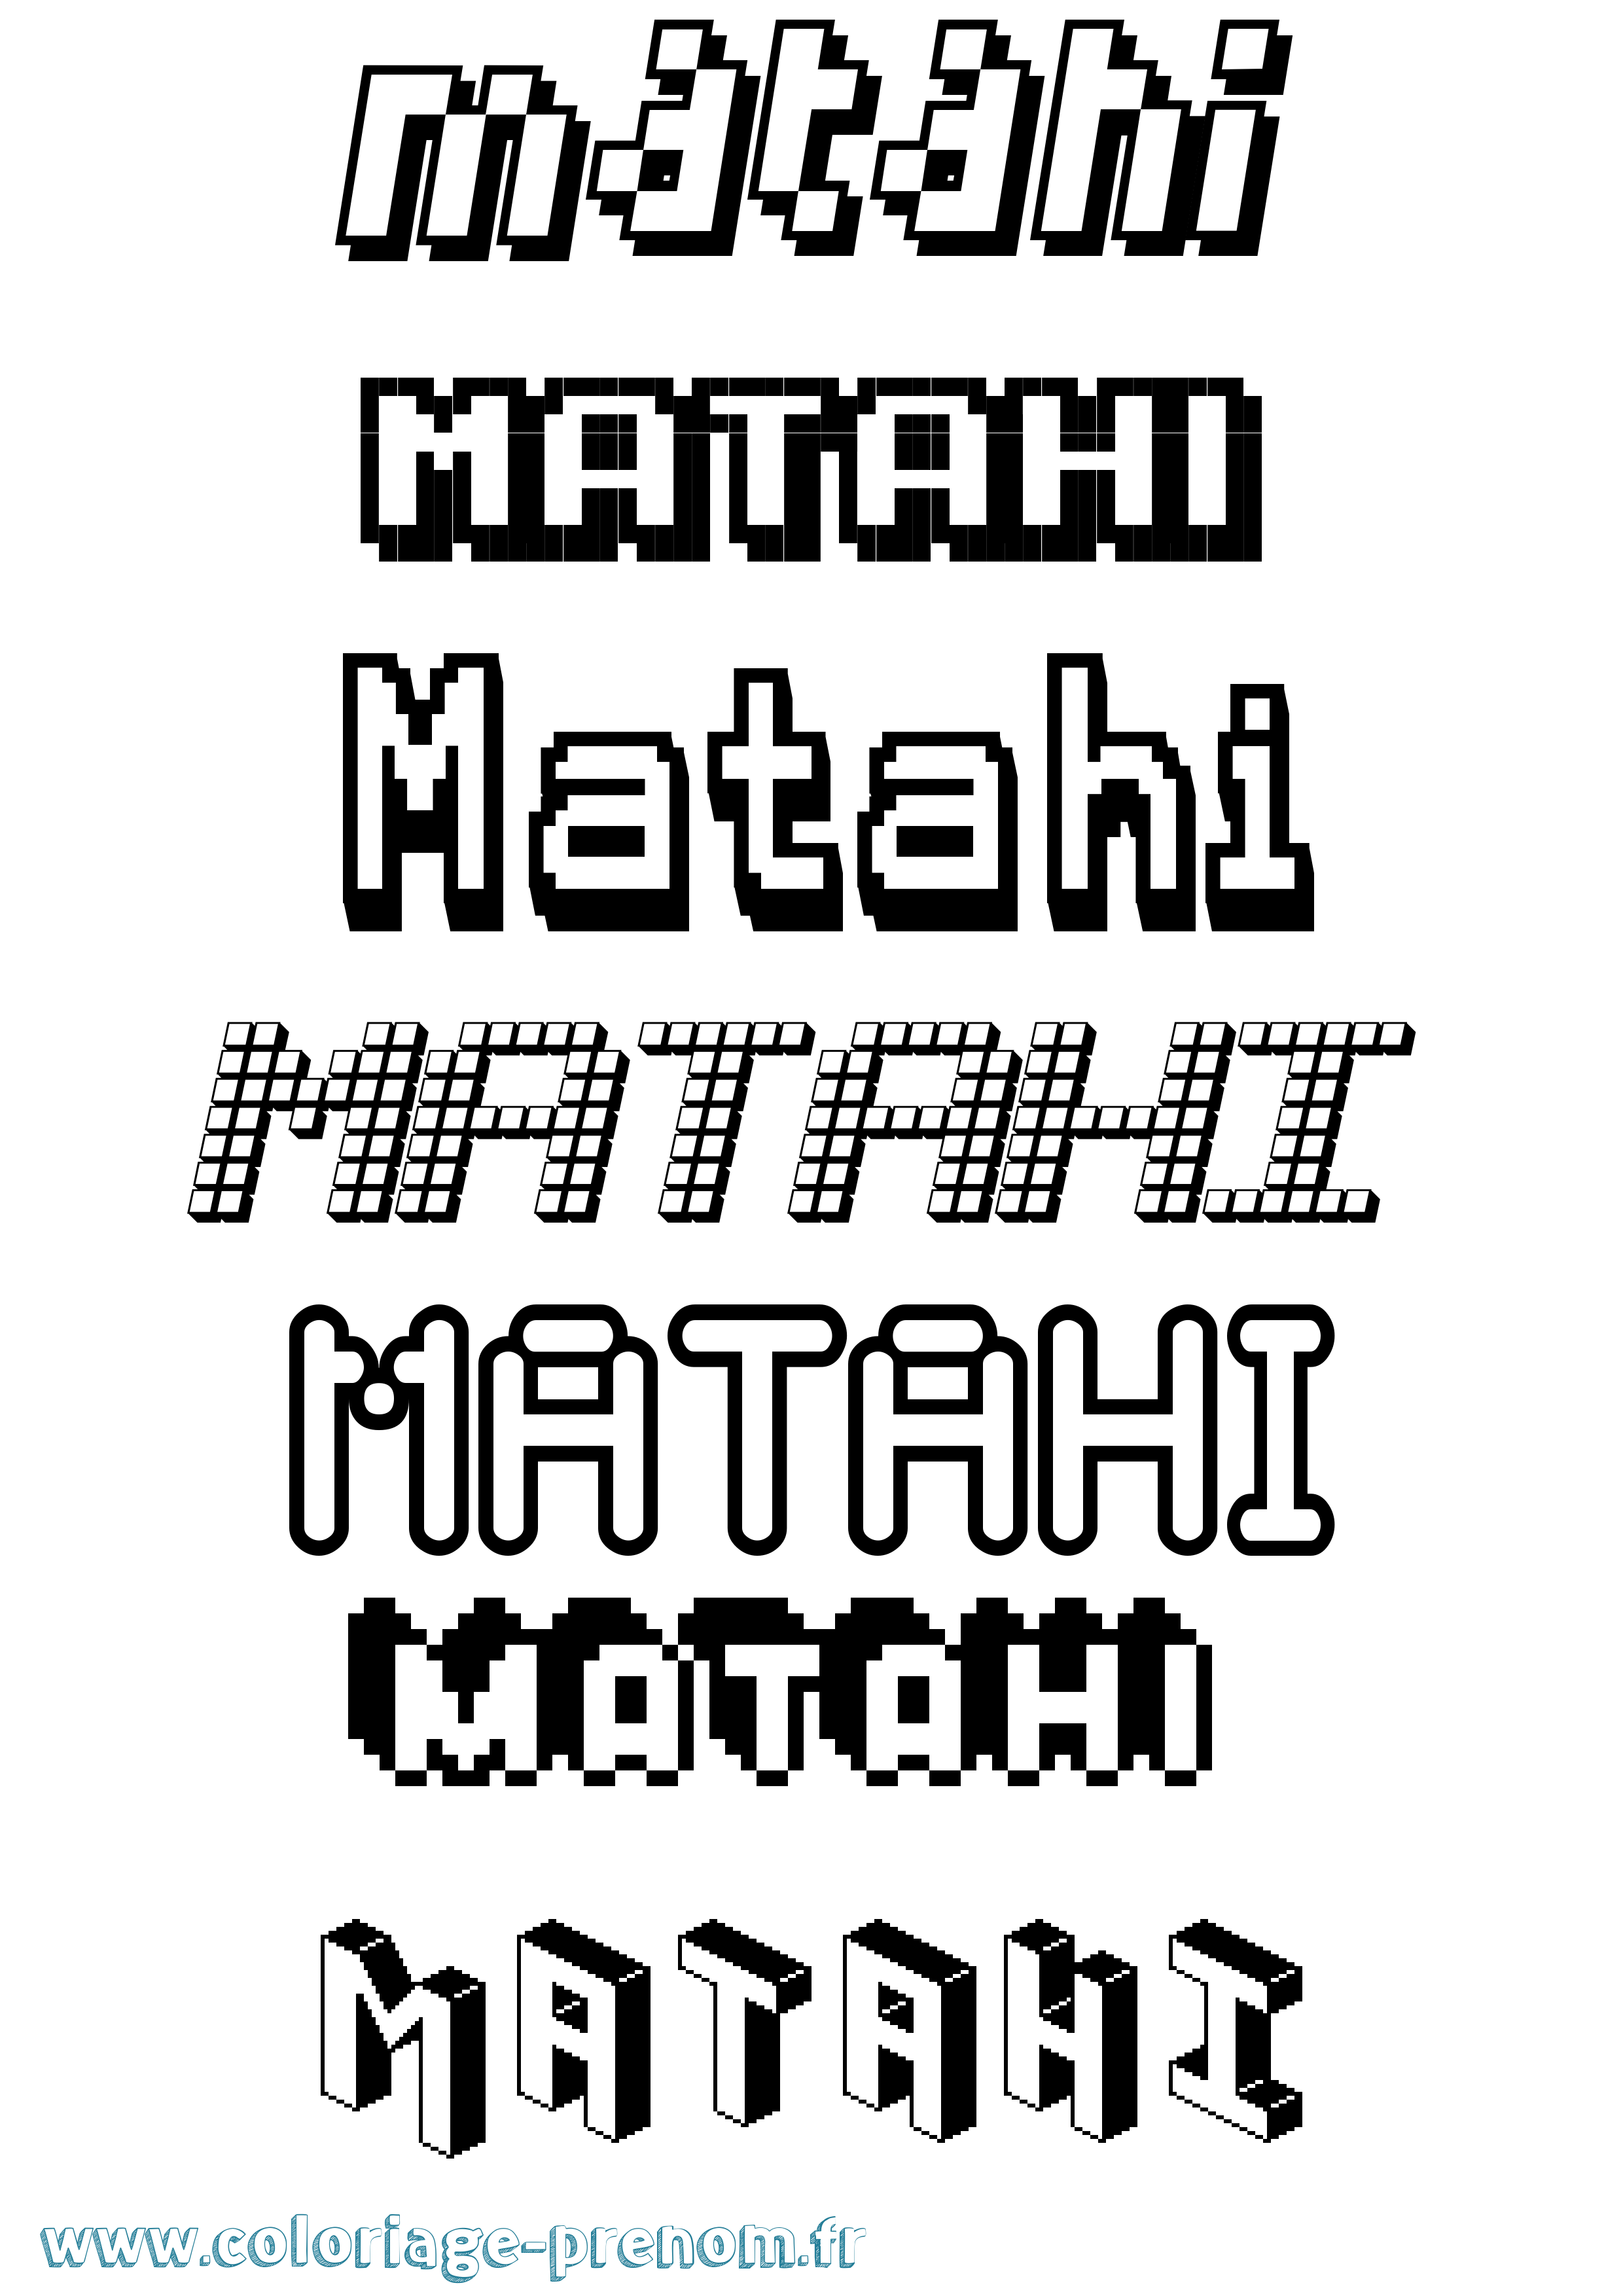 Coloriage prénom Matahi Pixel